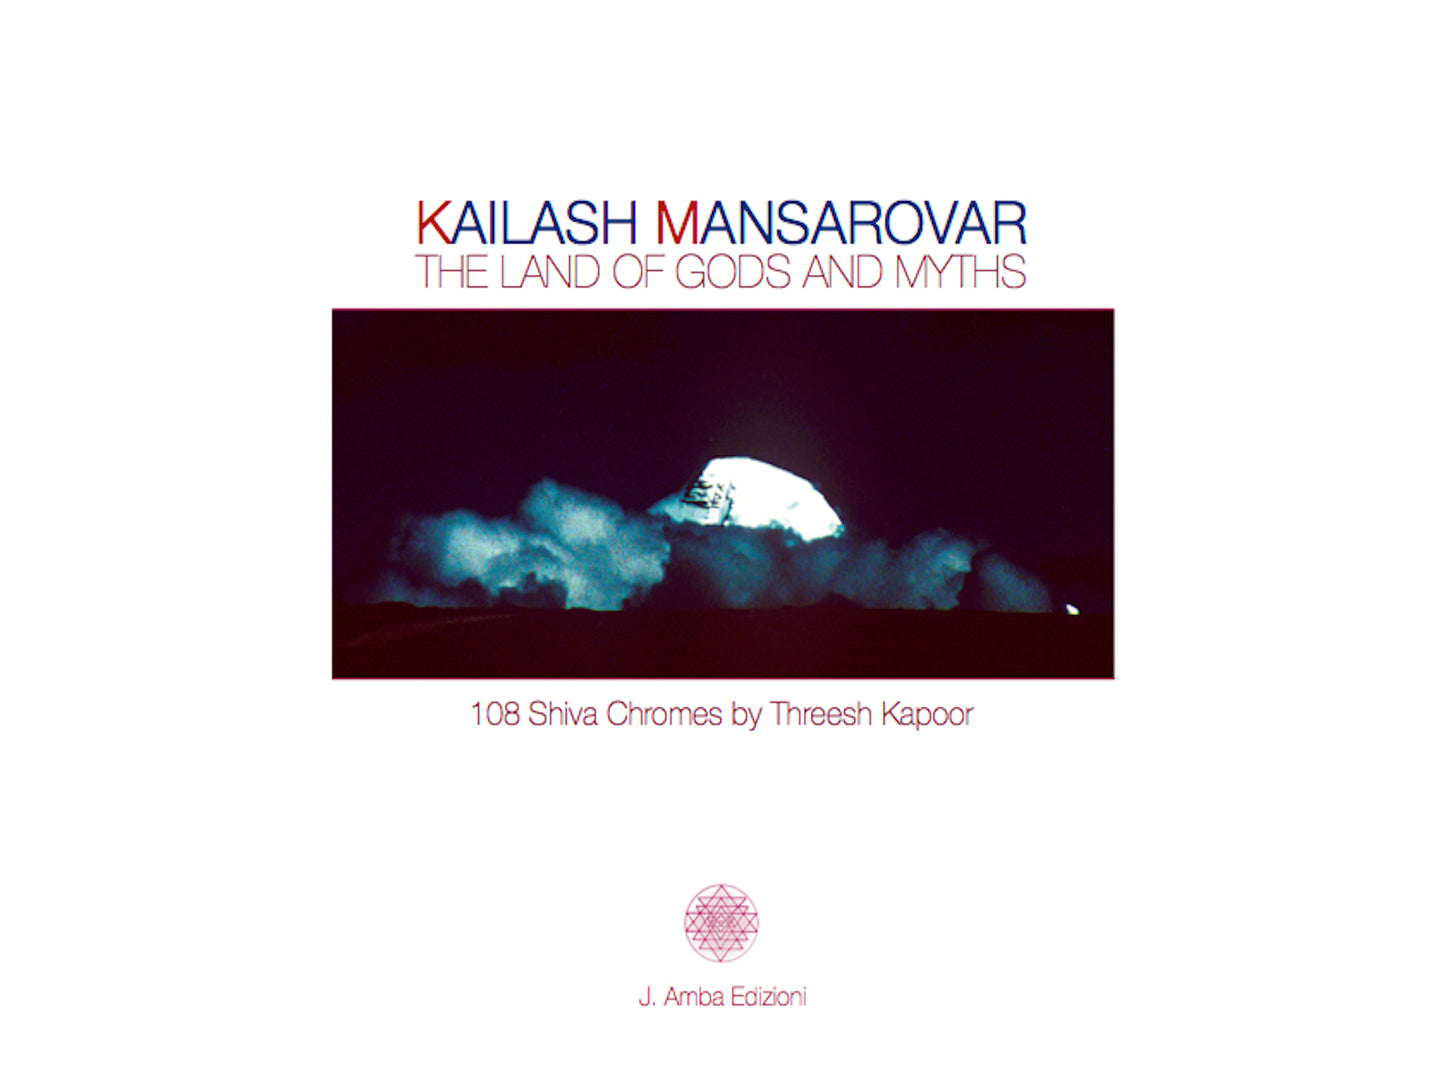 Kailash Mansarovar, The Land of Gods and Myths - Travel Photography & Spirituality Book by Threesh Kapoor